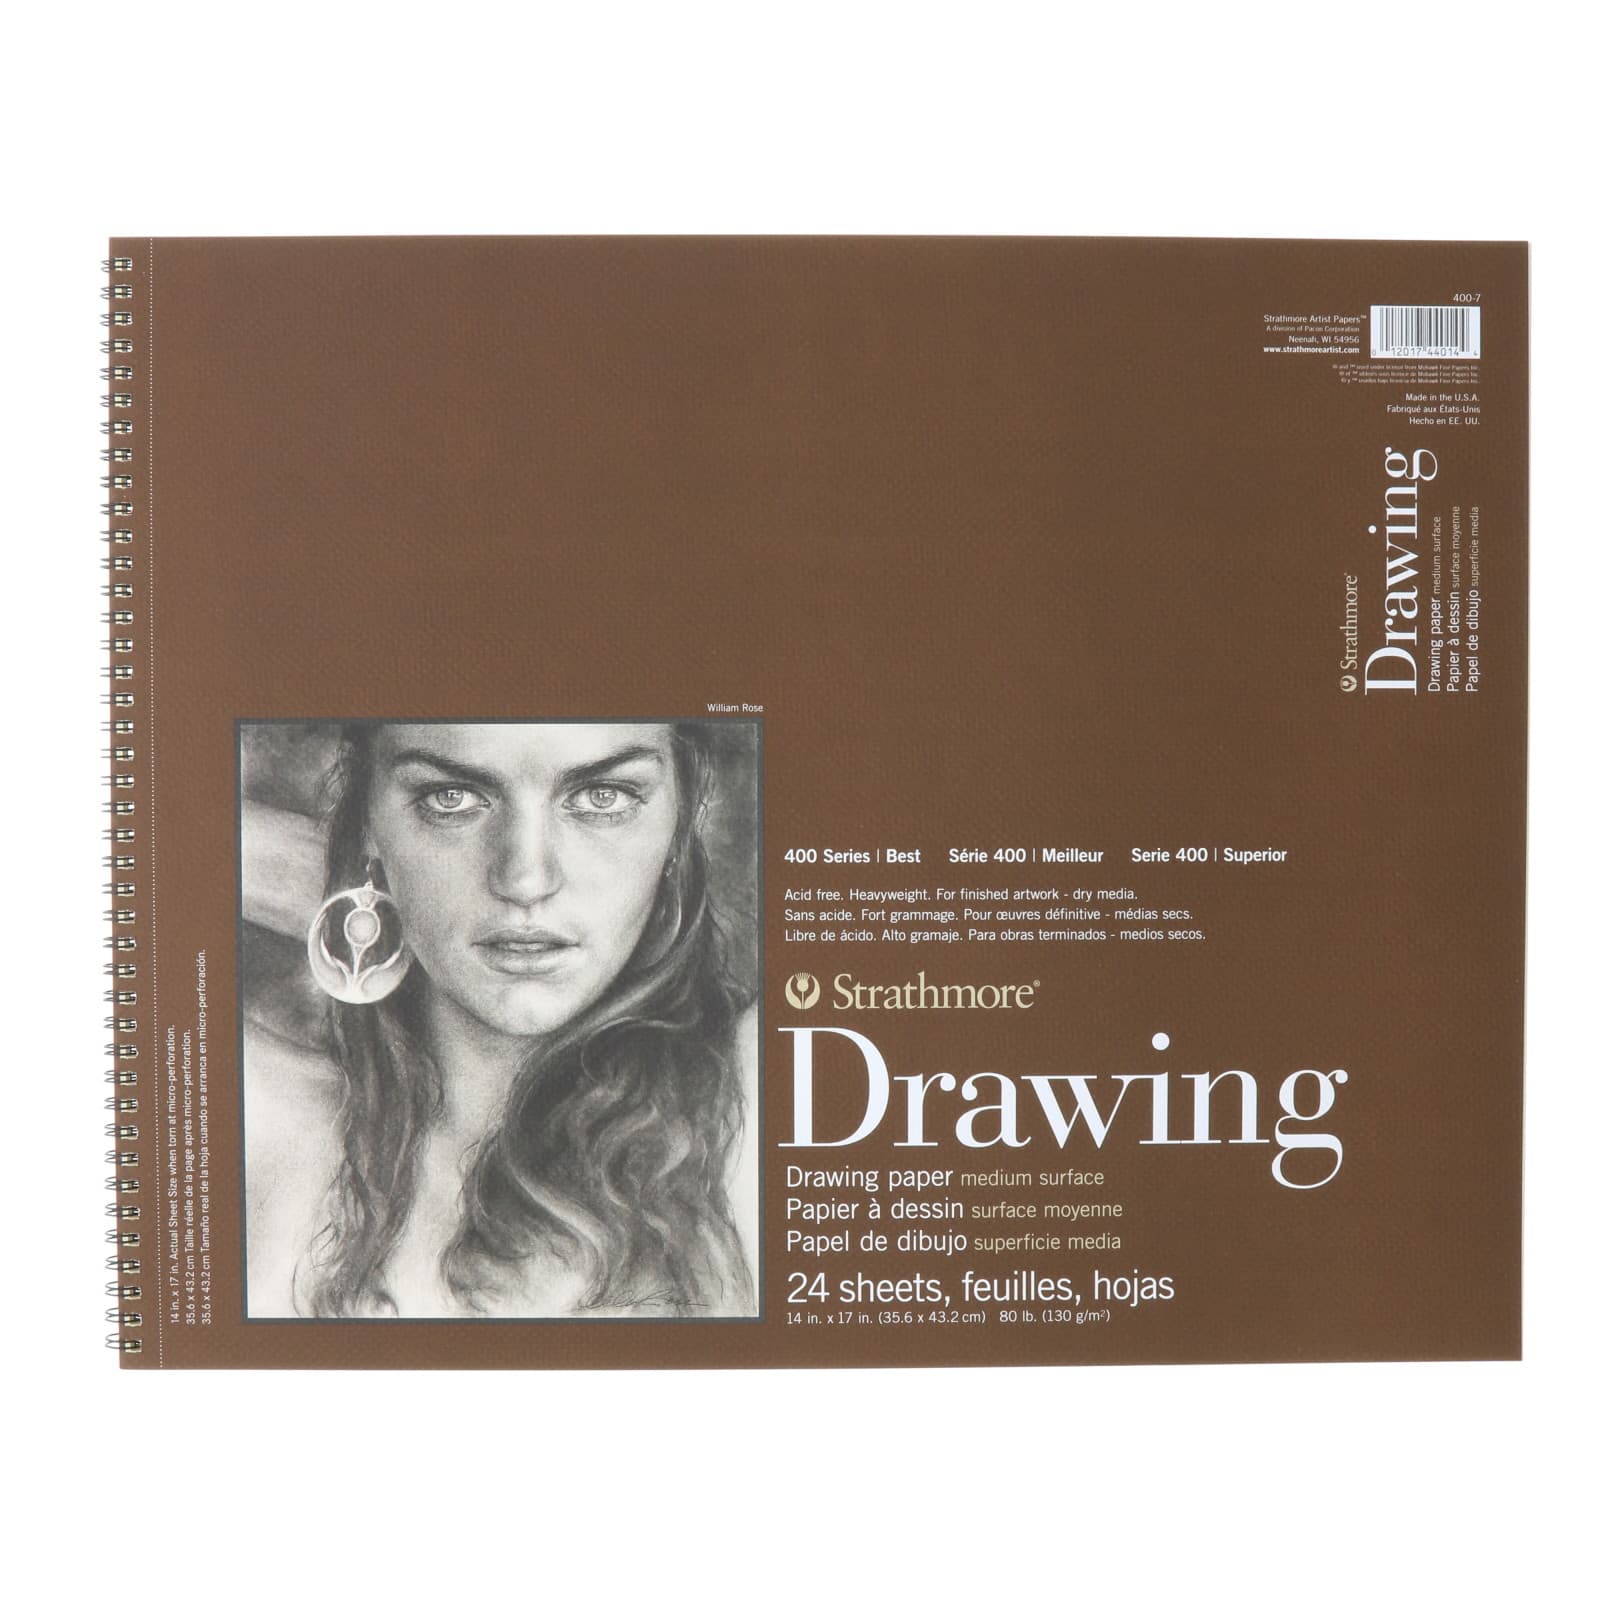 Pro Art Sketch Book 4x6 80 Sheets